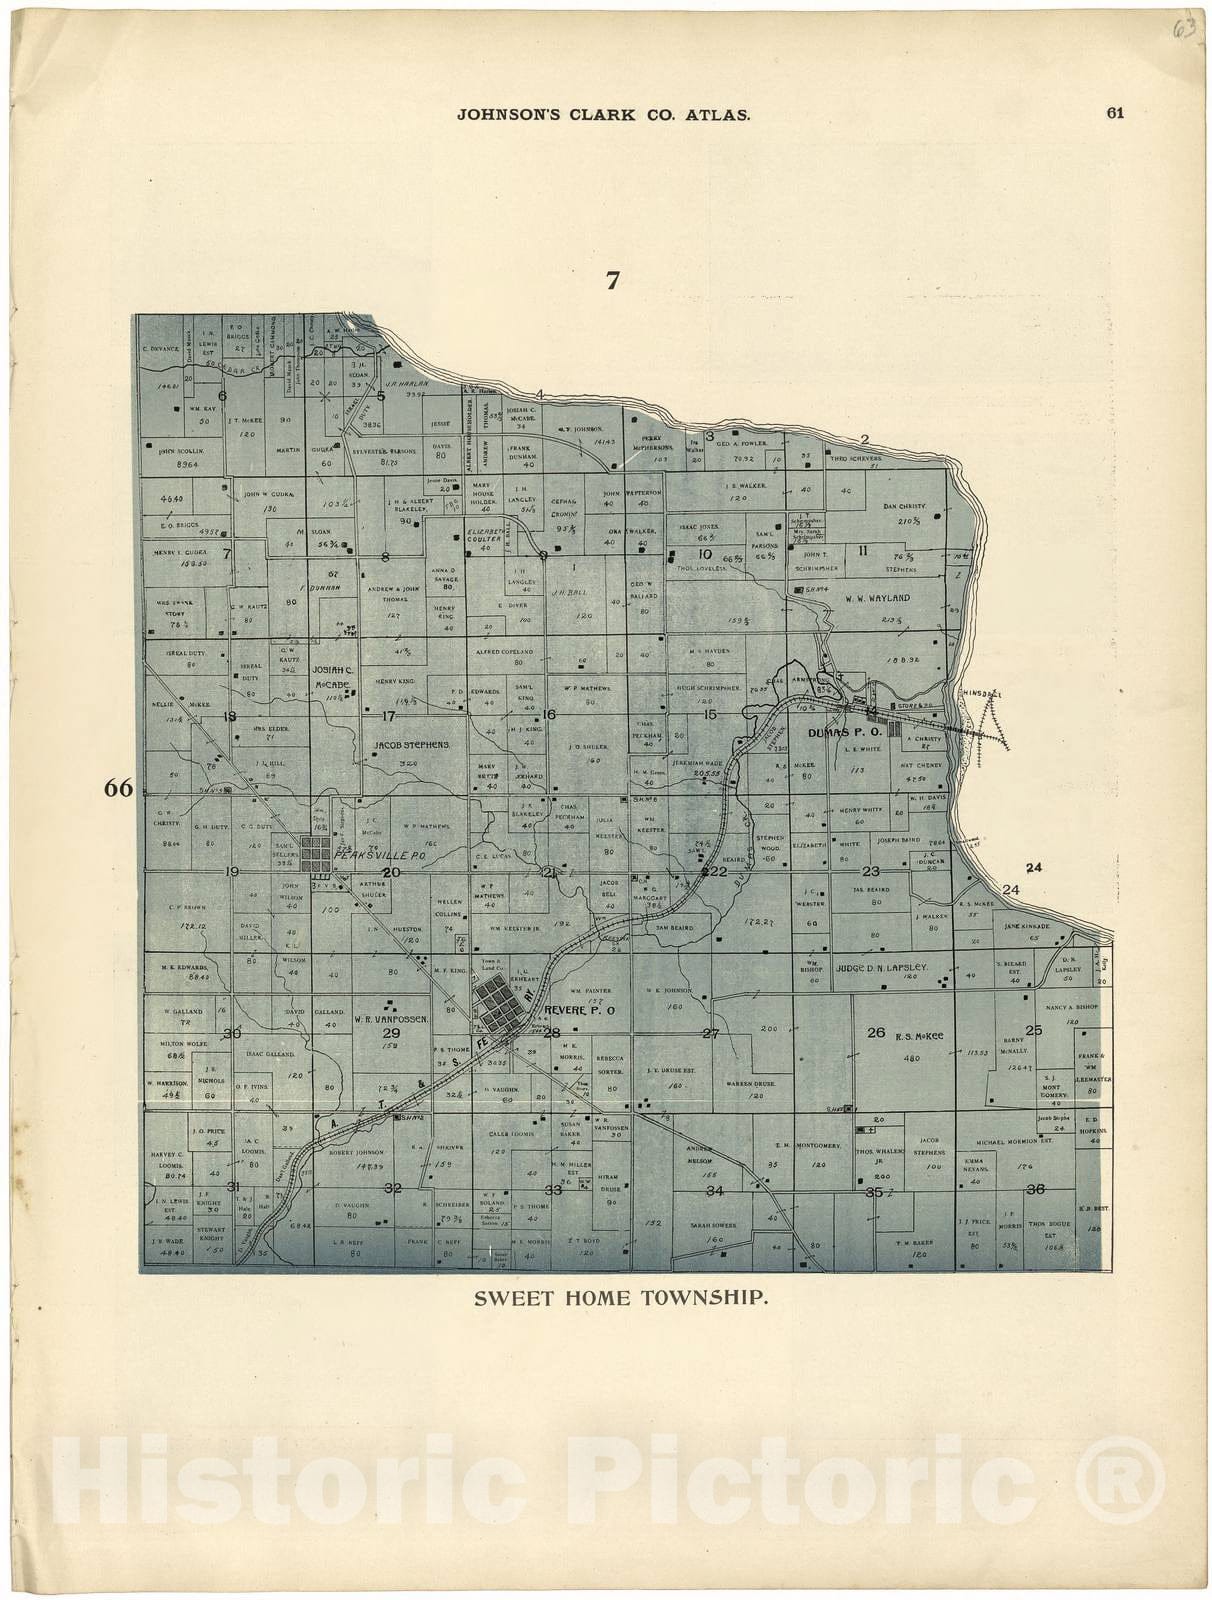 Historic 1896 Map - Johnson's Atlas, Clark County, Missouri - Sweet Home Township - Johnson's Clark Co. Atlas